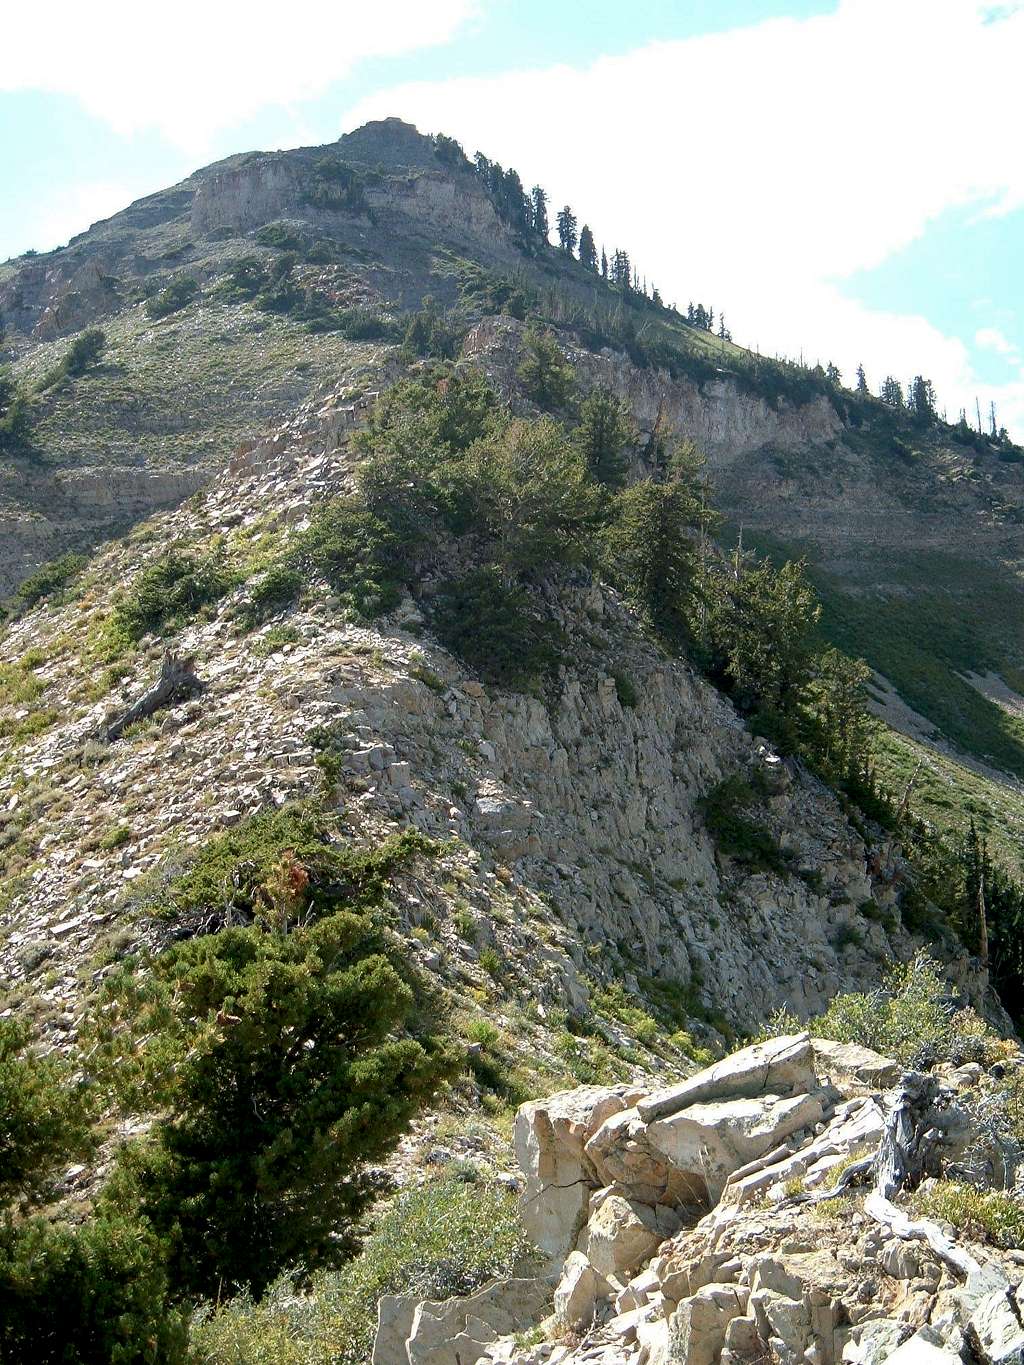 View of the Upper Portion of Sundance Ridge